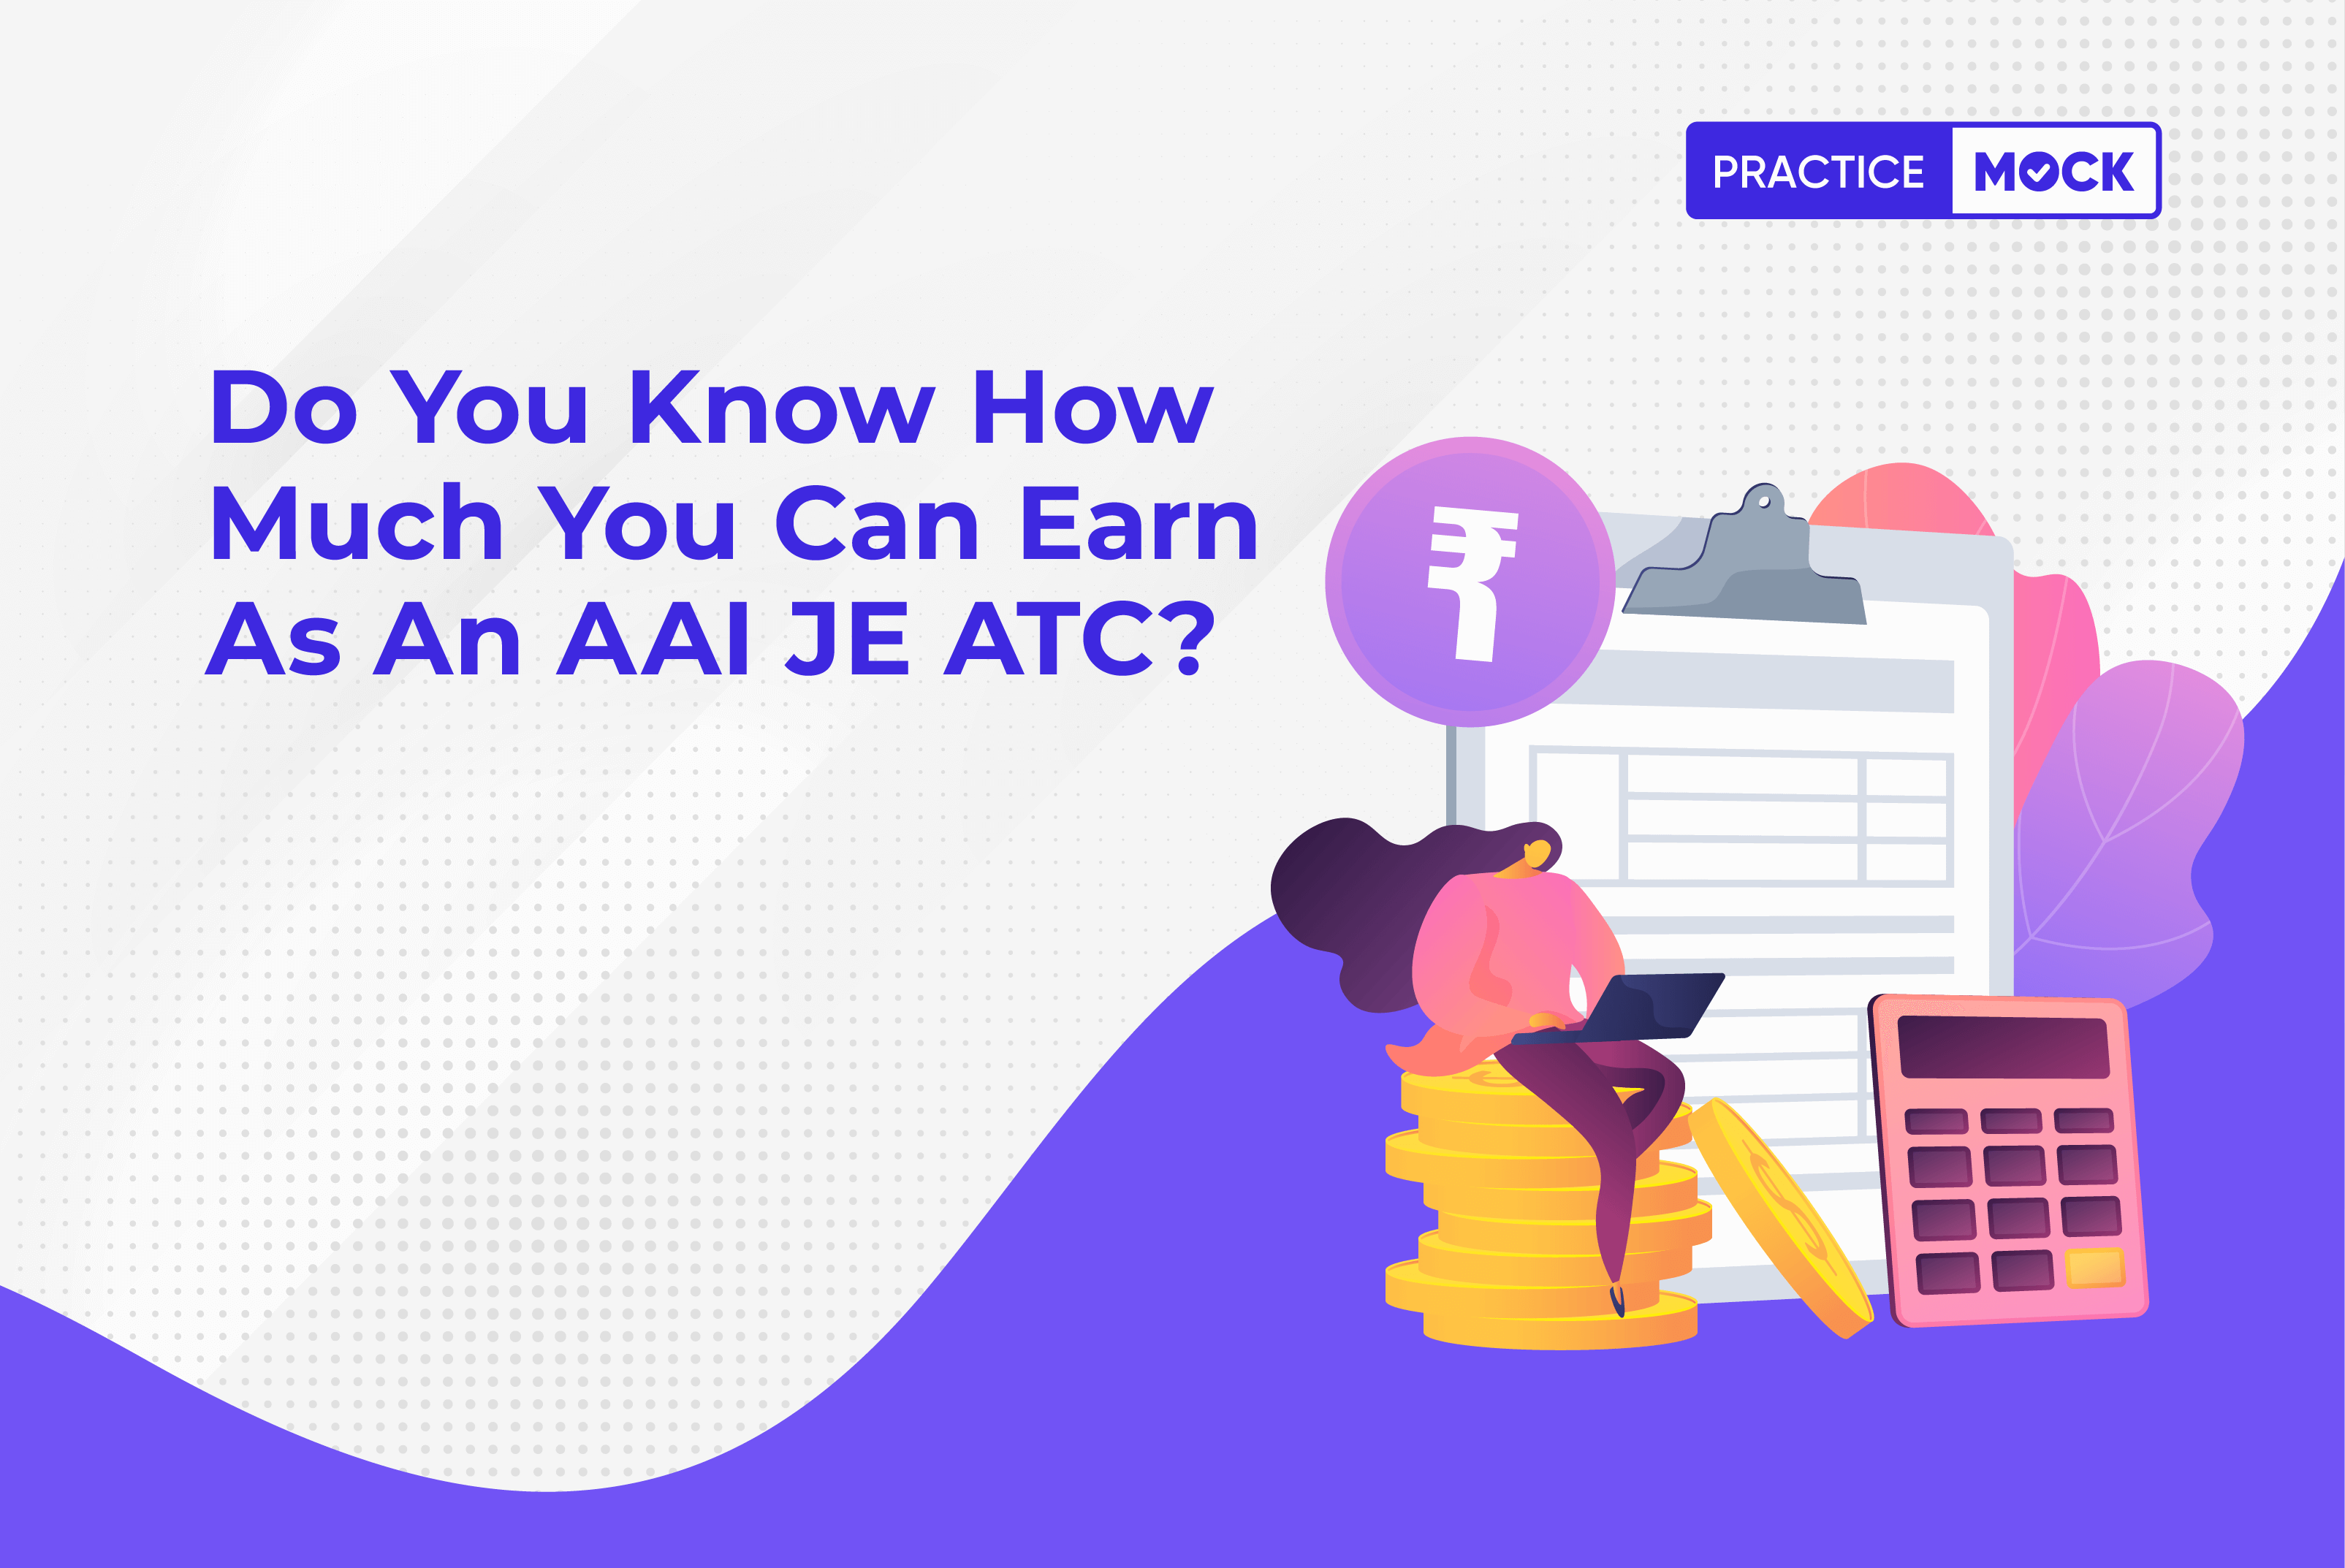 AAI JE ATC Salary Details PracticeMock